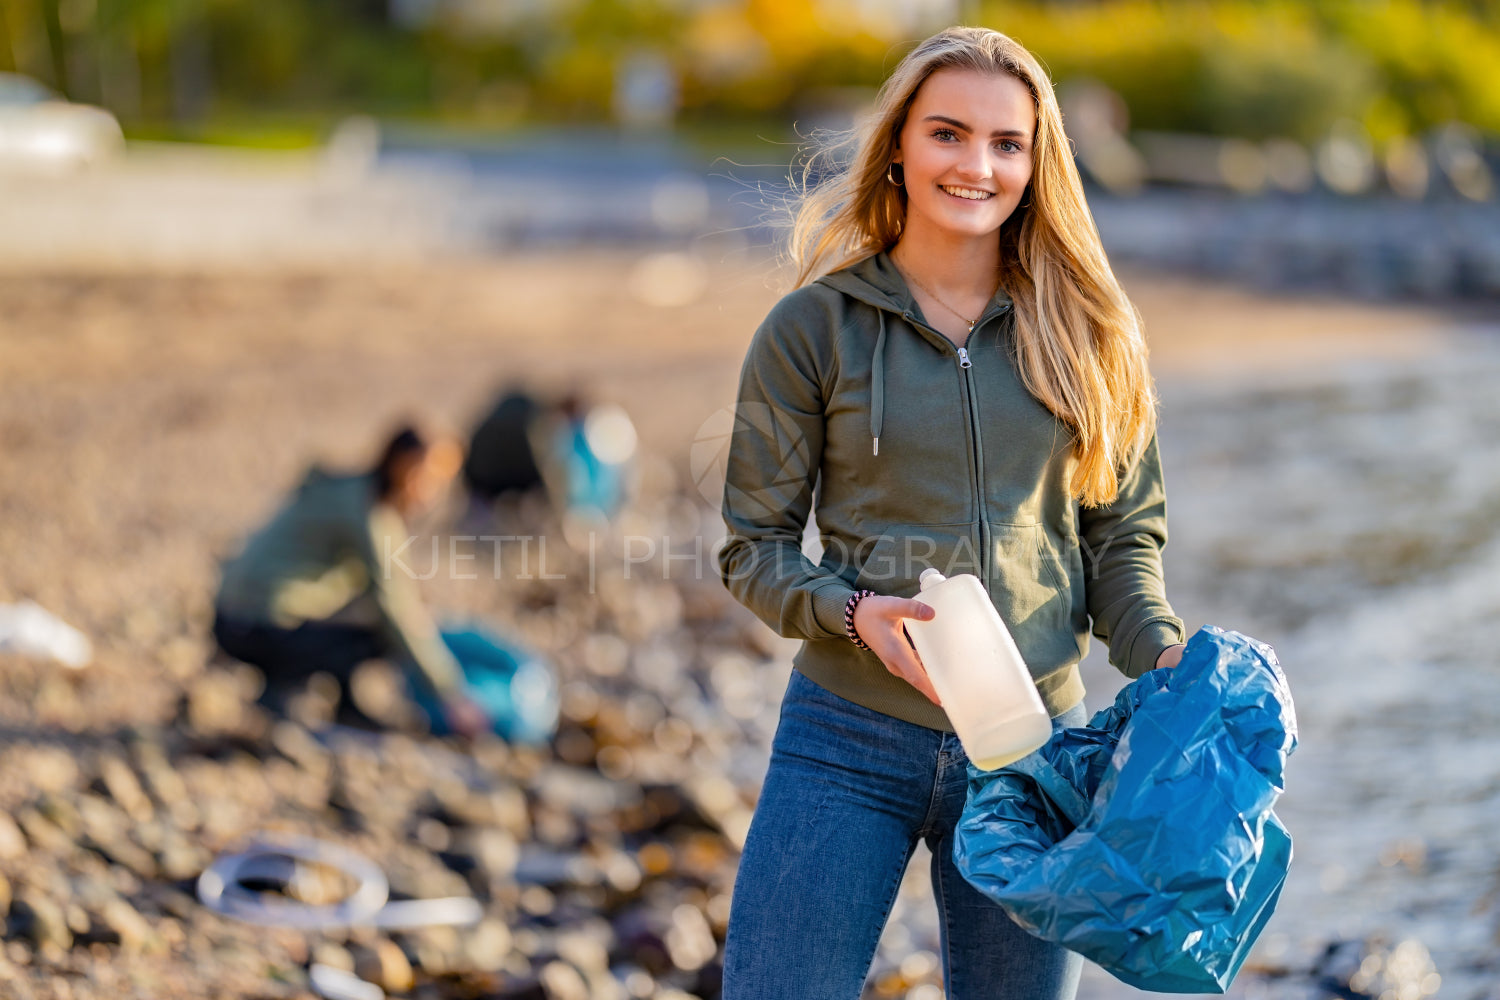 Volunteer holding bottle and garbage bag at beach